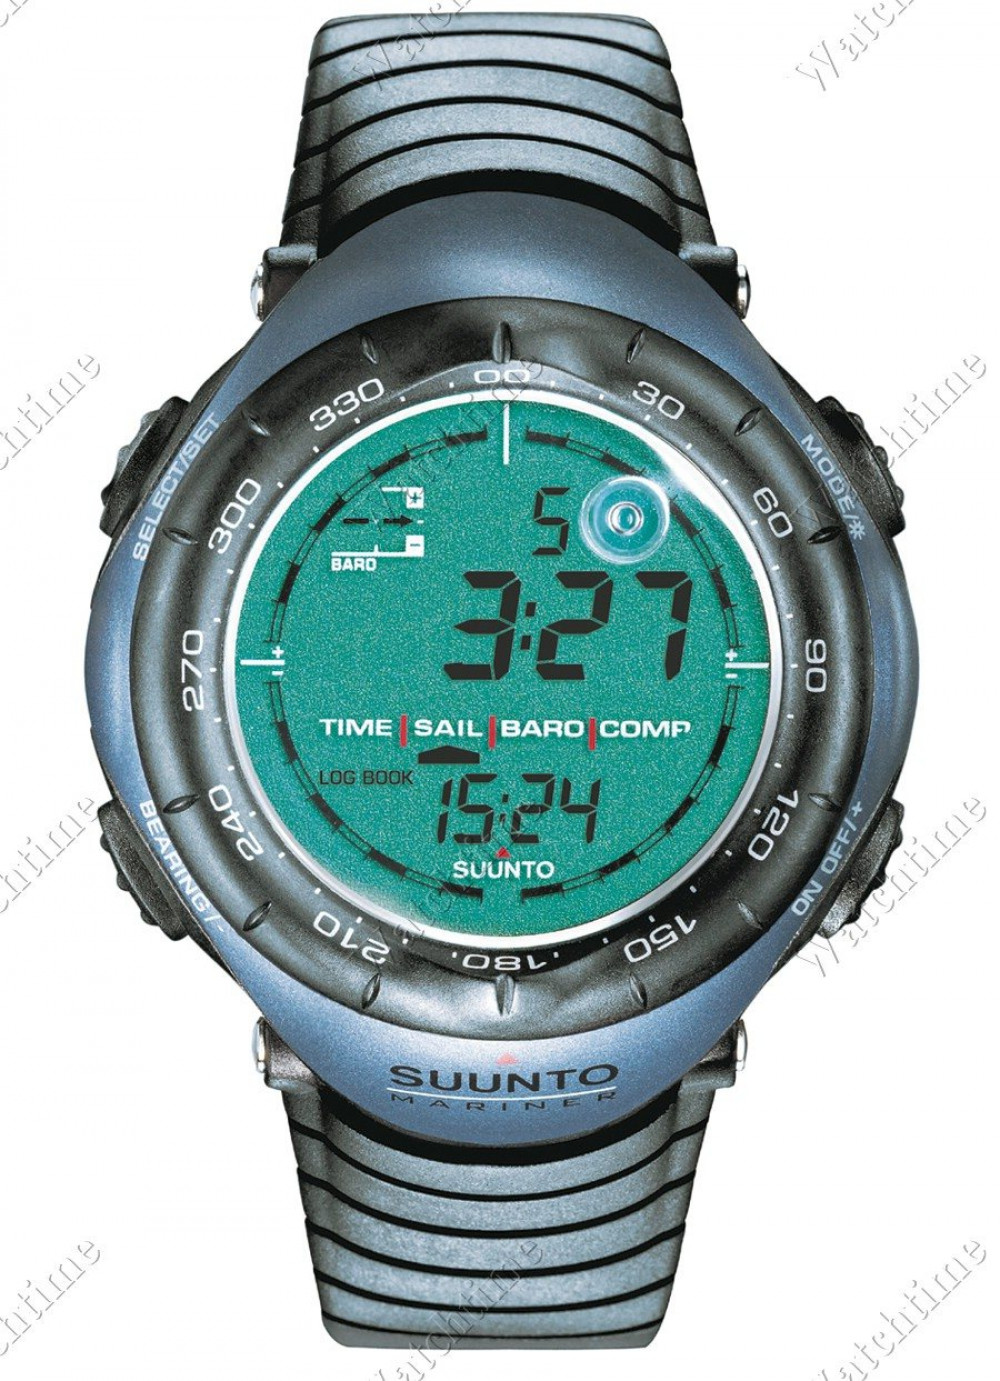 Zegarek firmy Suunto, model Mariner